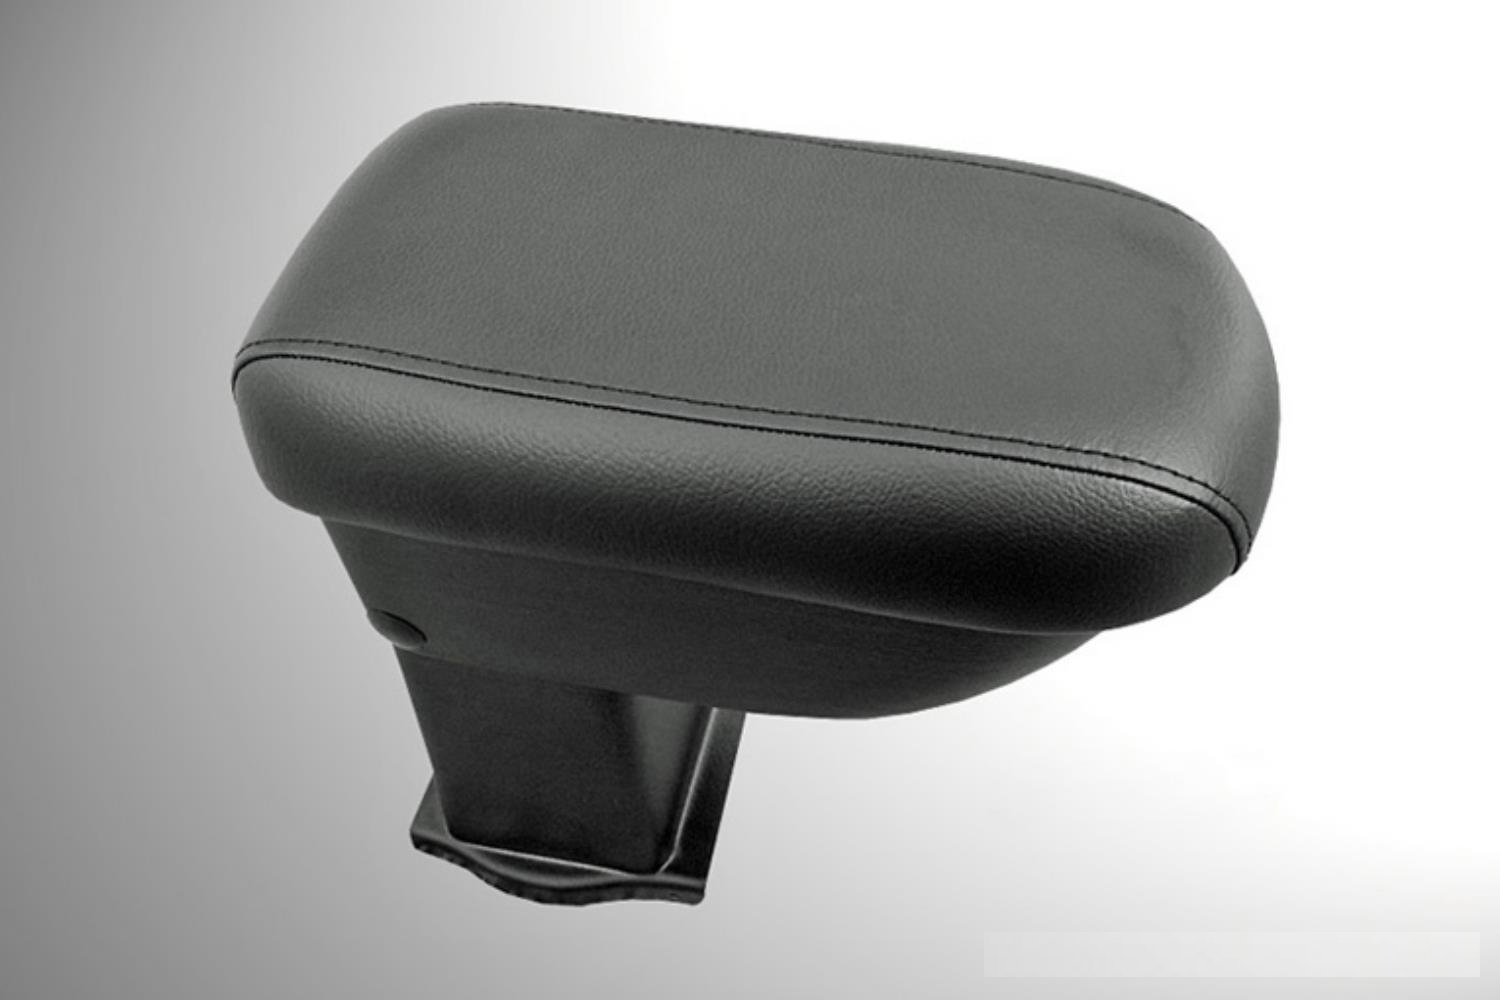 https://www.carparts-expert.com/images/stories/virtuemart/product/kia10riar-kia-rio-yb-2017-5-door-hatchback-armrest-basic-1.jpg